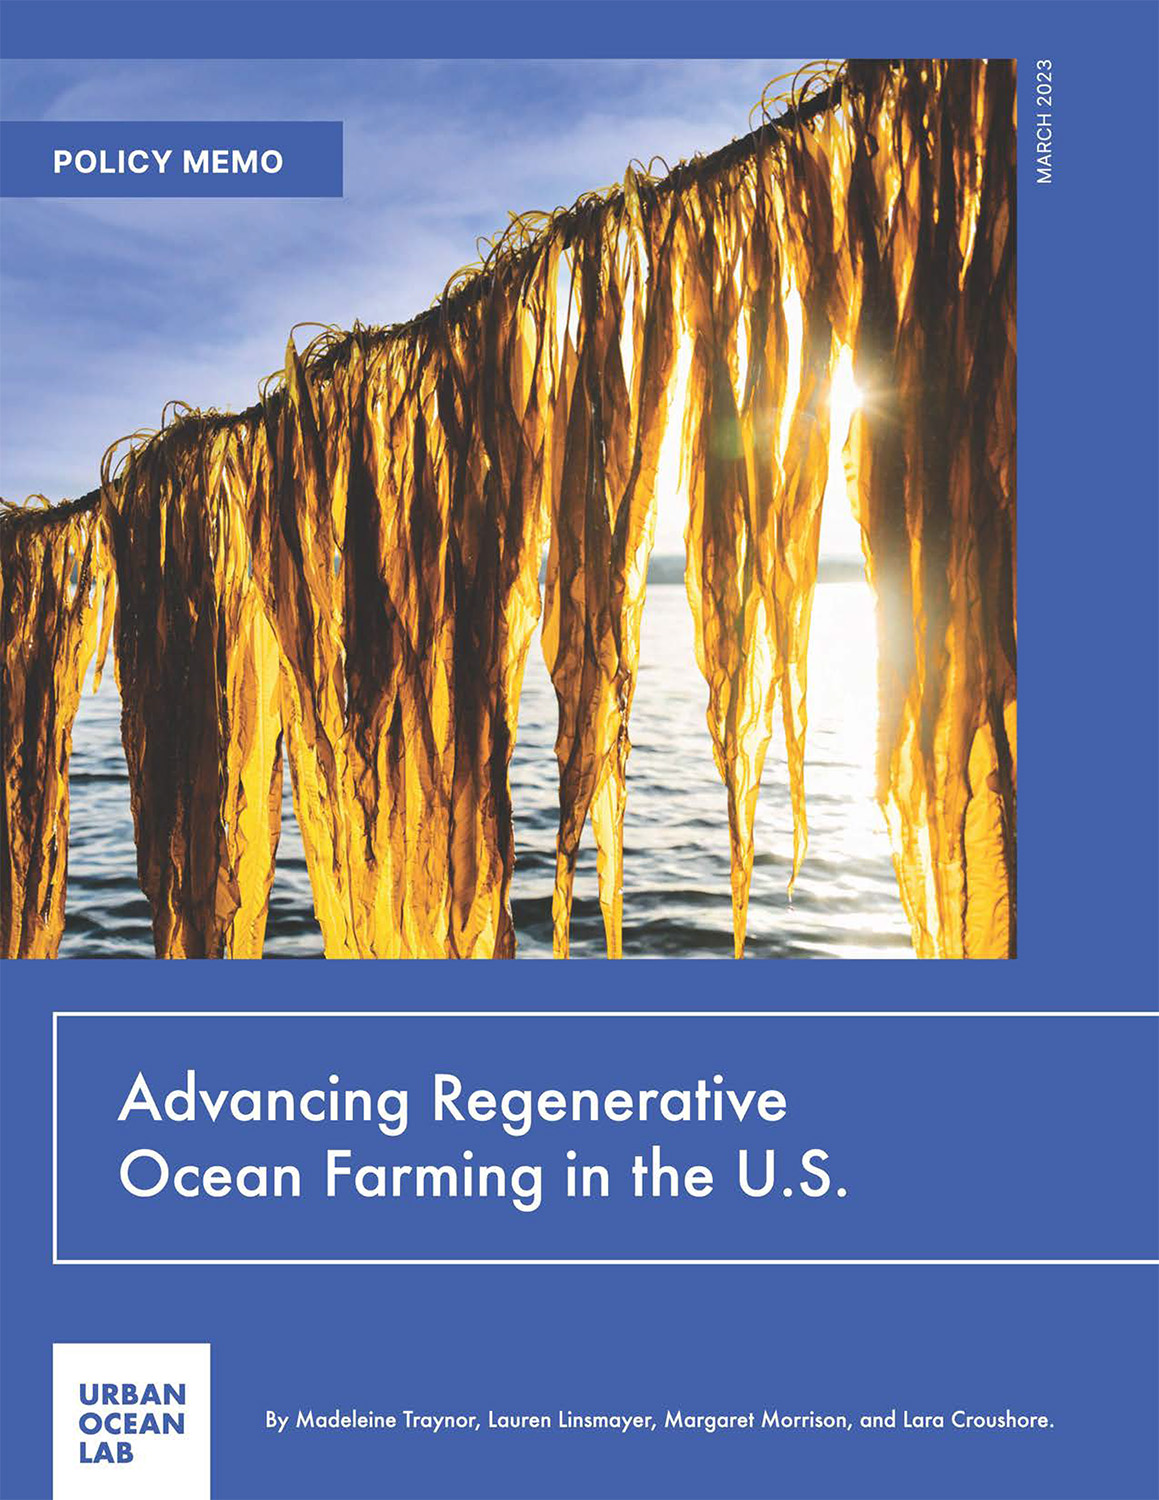 Advancing regenerative ocean farming in the U.S.